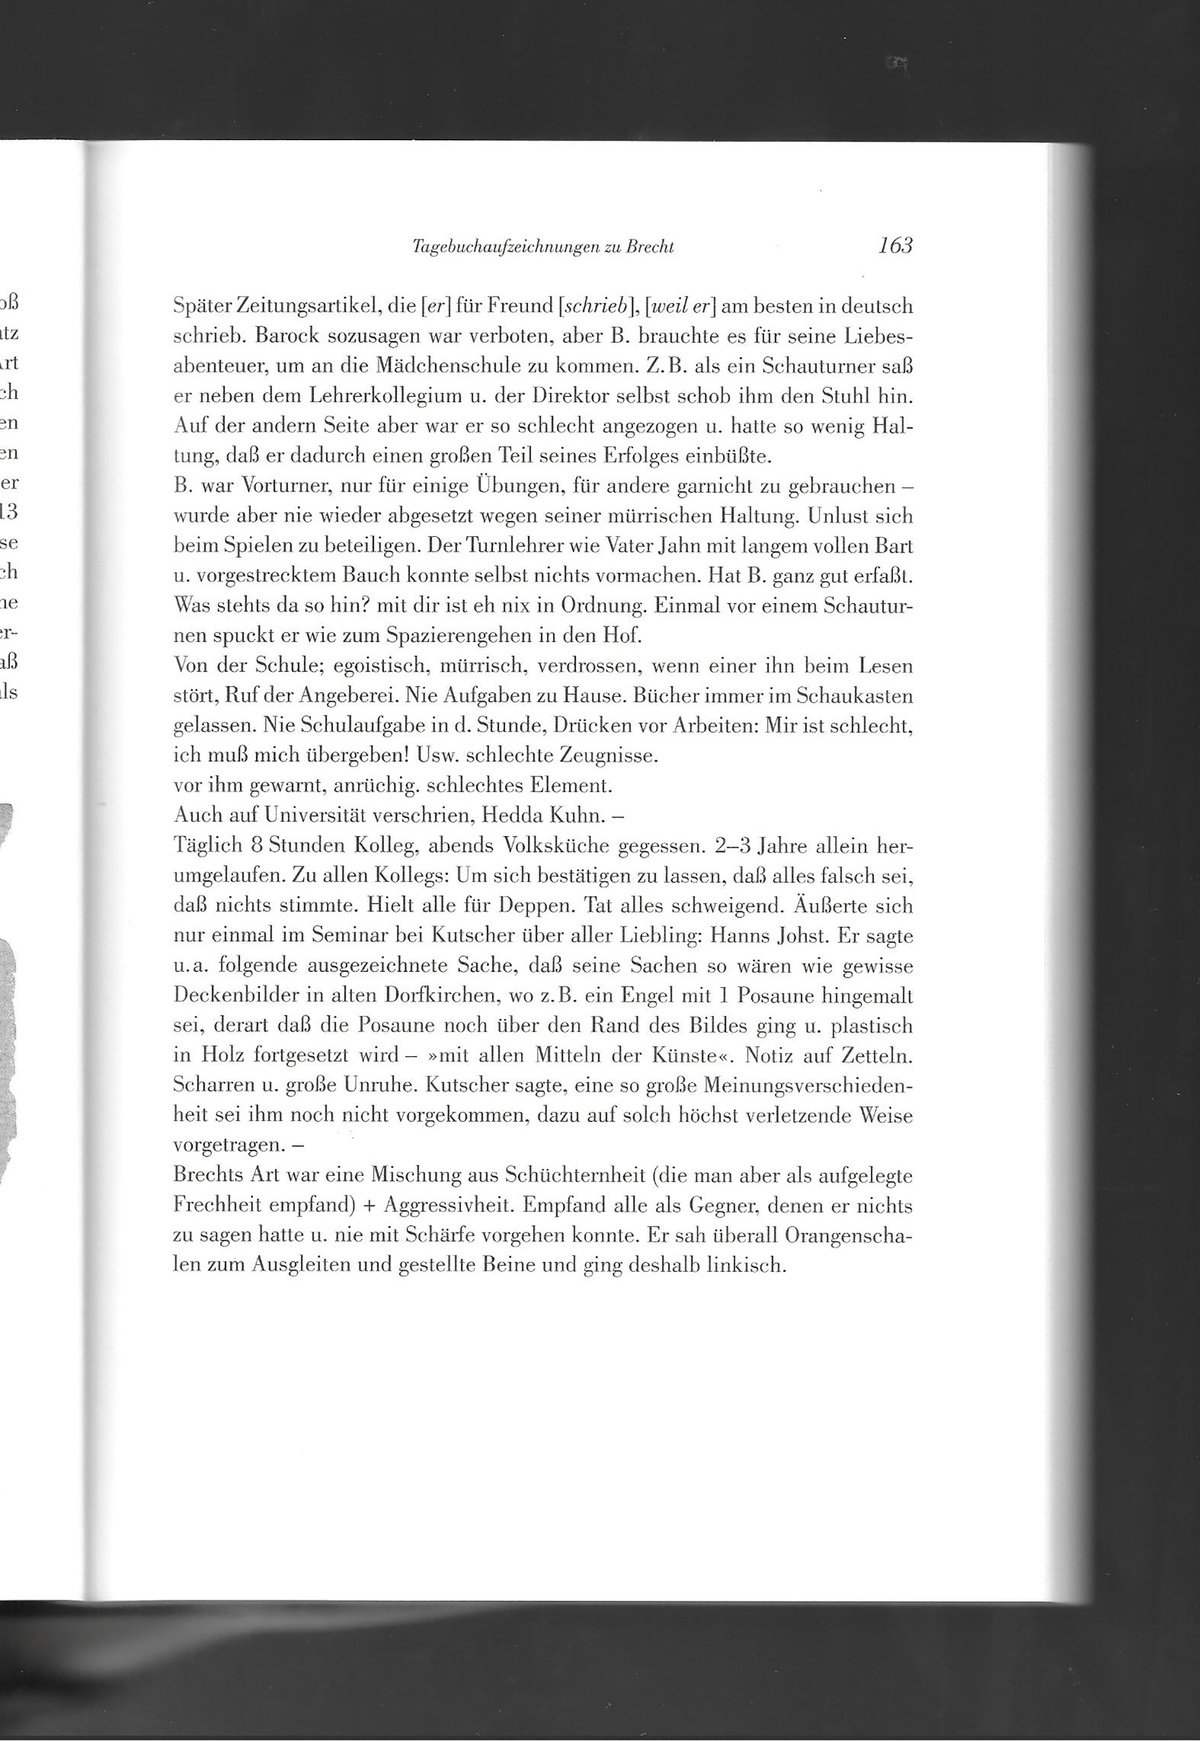 Elisabeth Hauptmann 2 × sehr über ihn geärgert. Diary notes on Brecht.With a prefatory note by Martin Kölbel and Peter Villwock.In Sinn und Form, Heft 2/2021, p. 155-163, here p. 163